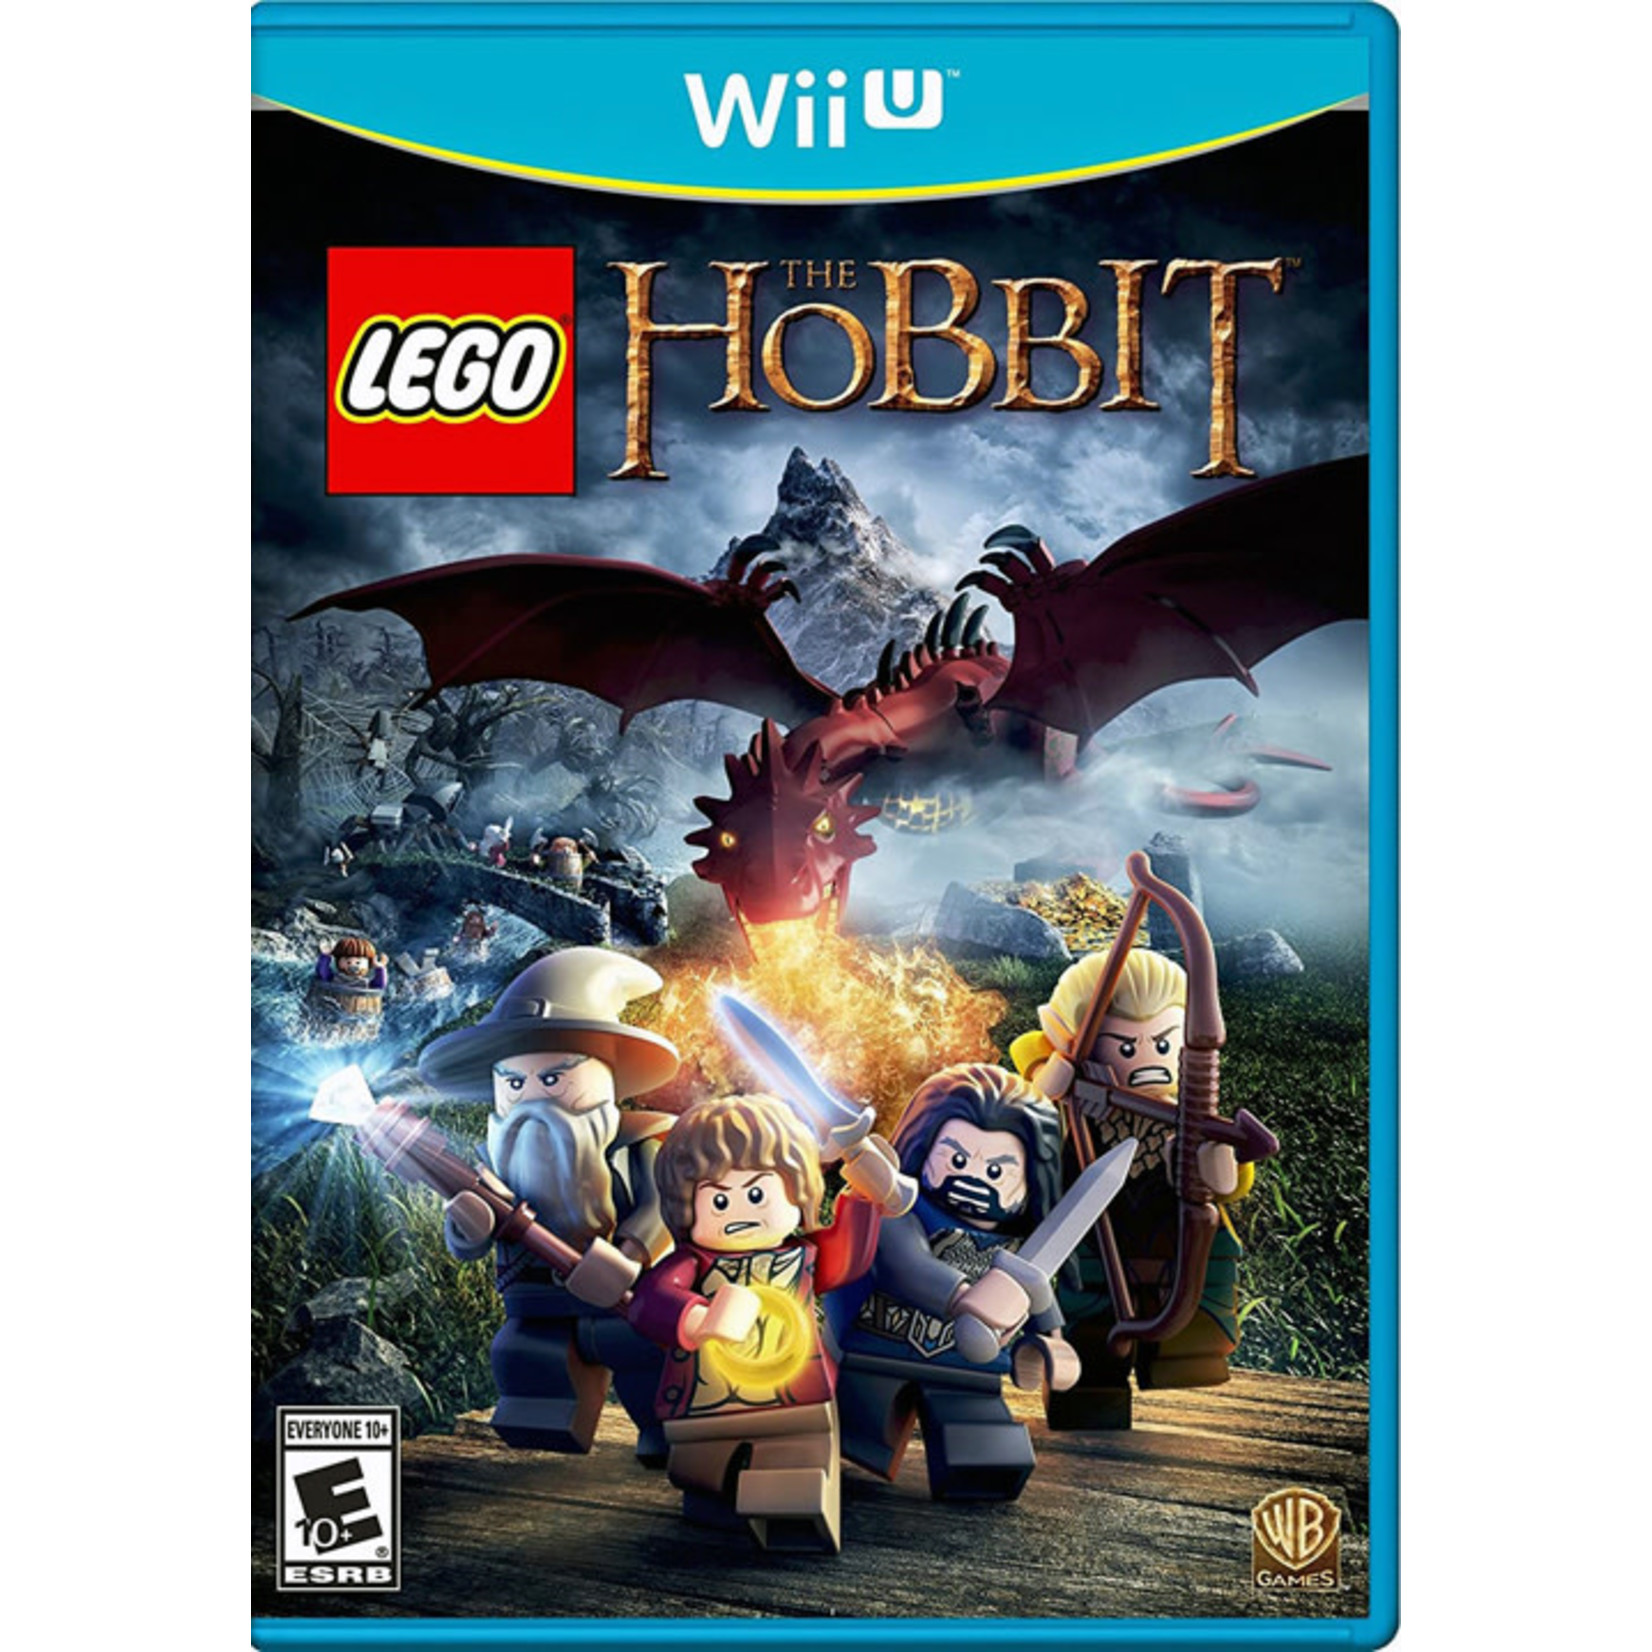 WIIU-LEGO The Hobbit